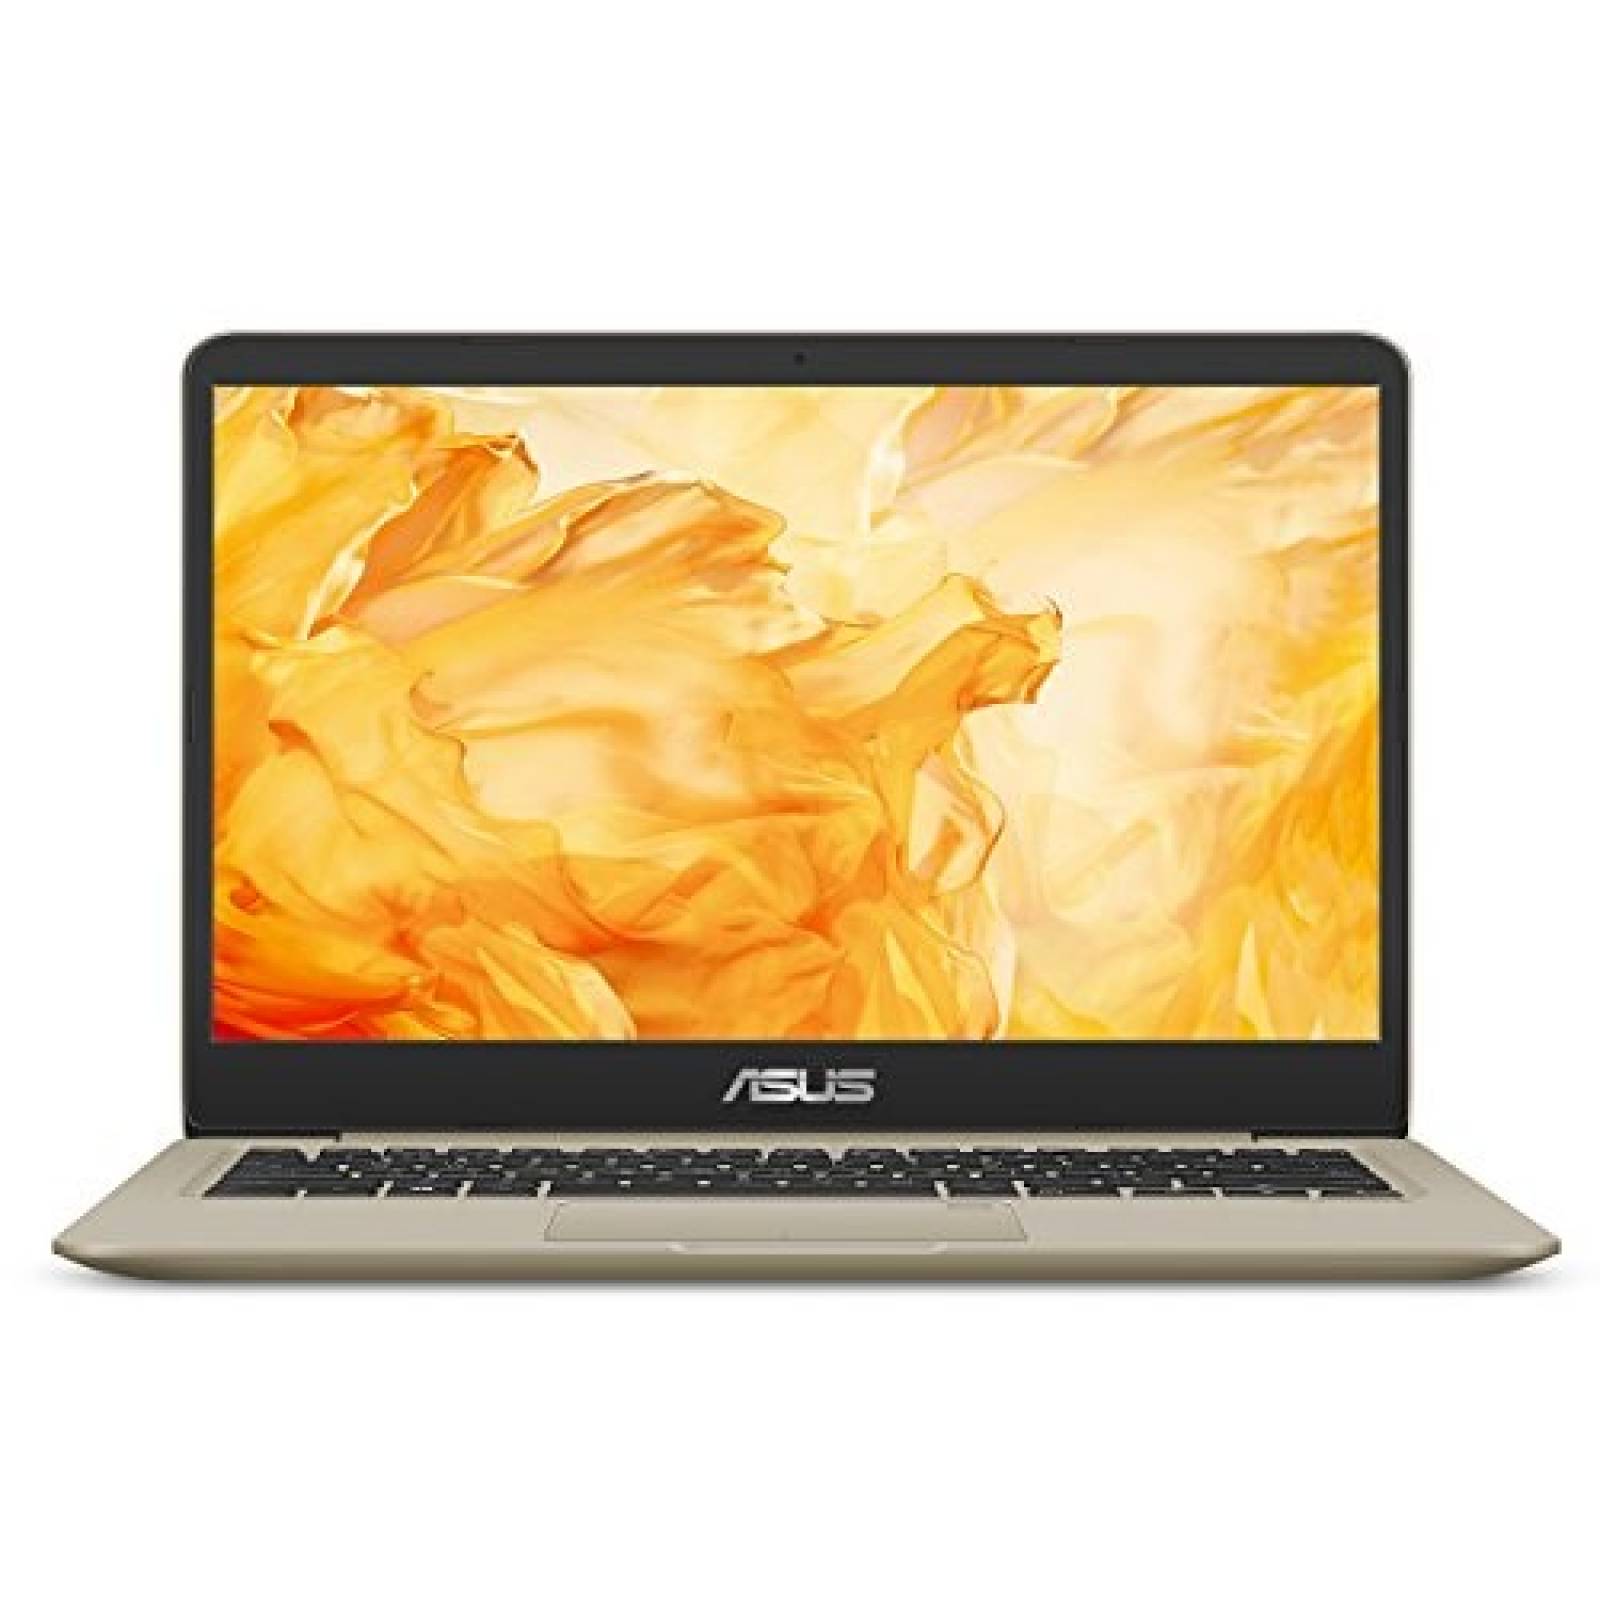 Laptop Asus VivoBook S 14 i7 8GB 256GB GeForce MX150